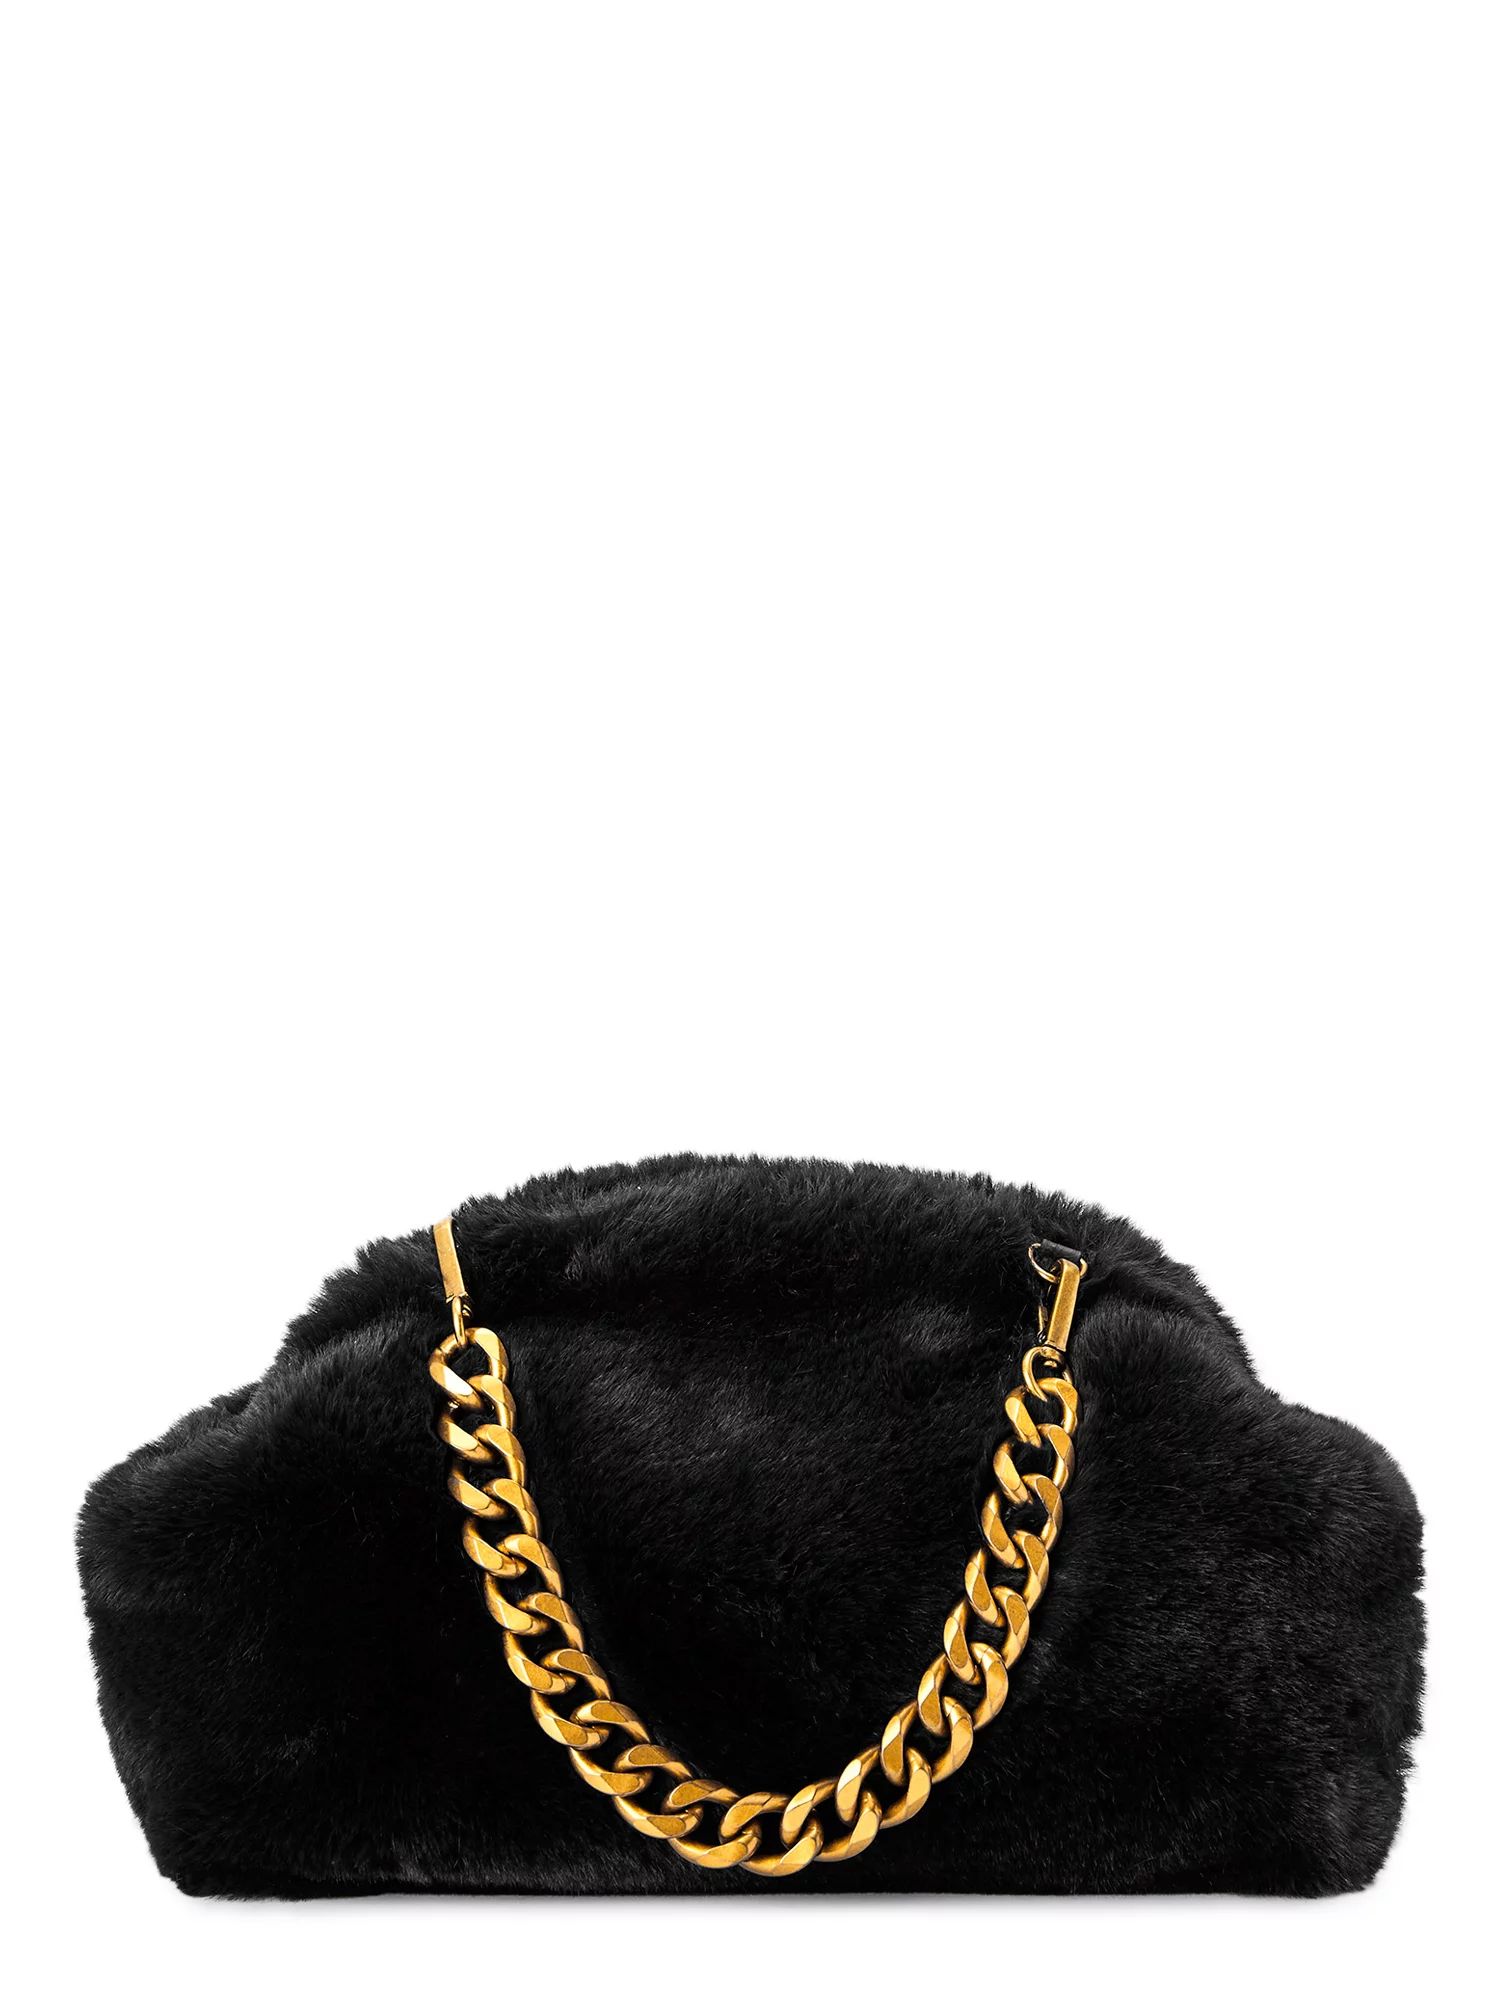 Scoop Women's Faux Fur Clutch with Chain Handle Black | Walmart (US)